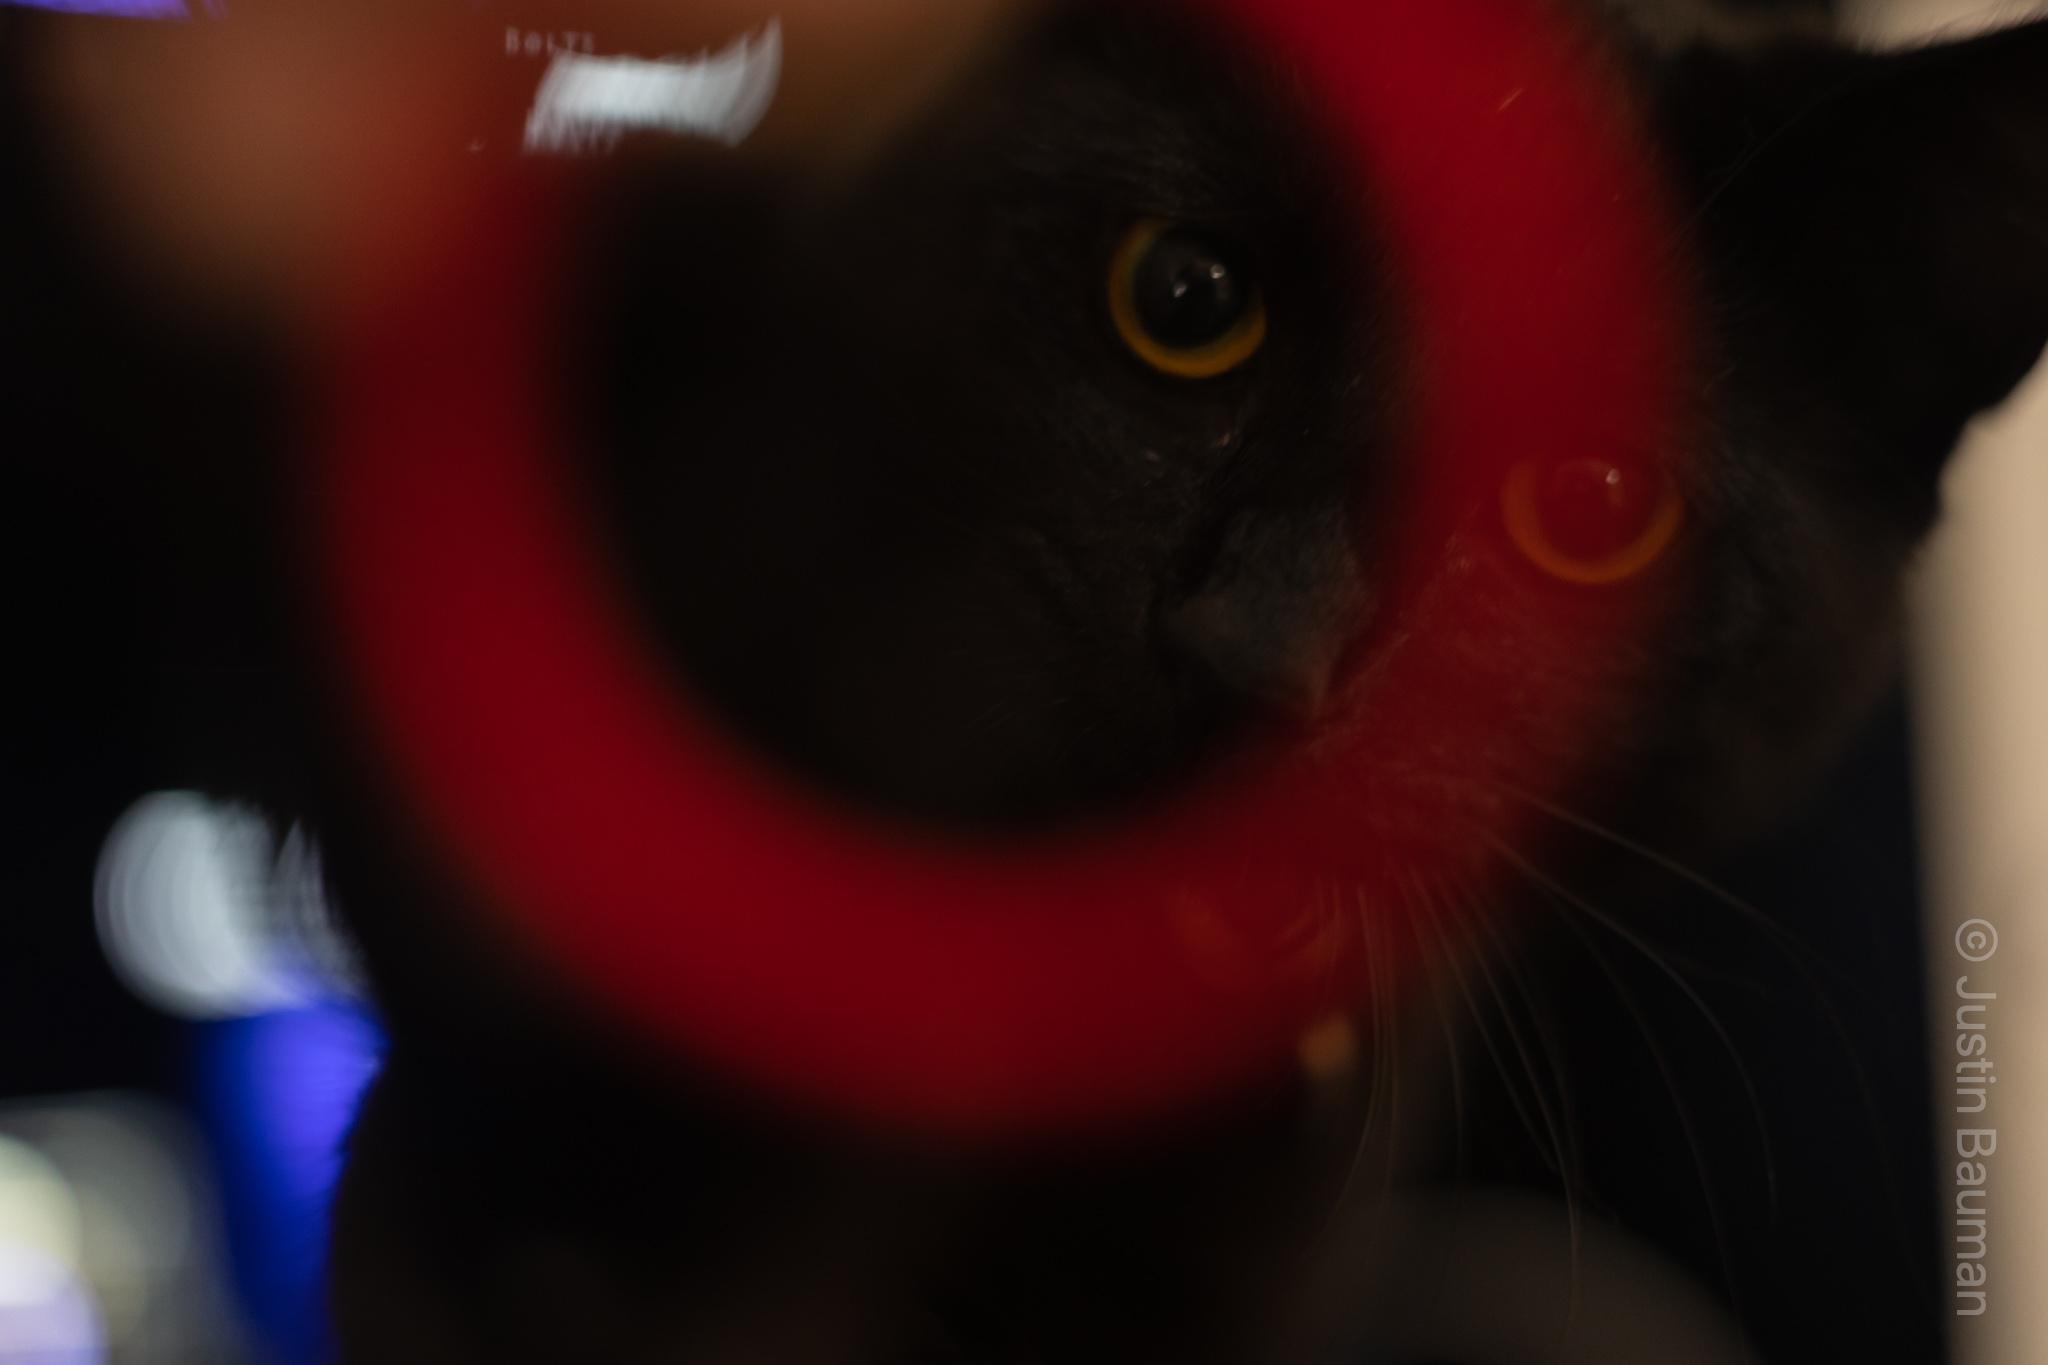 Luna looking through a red hair tie